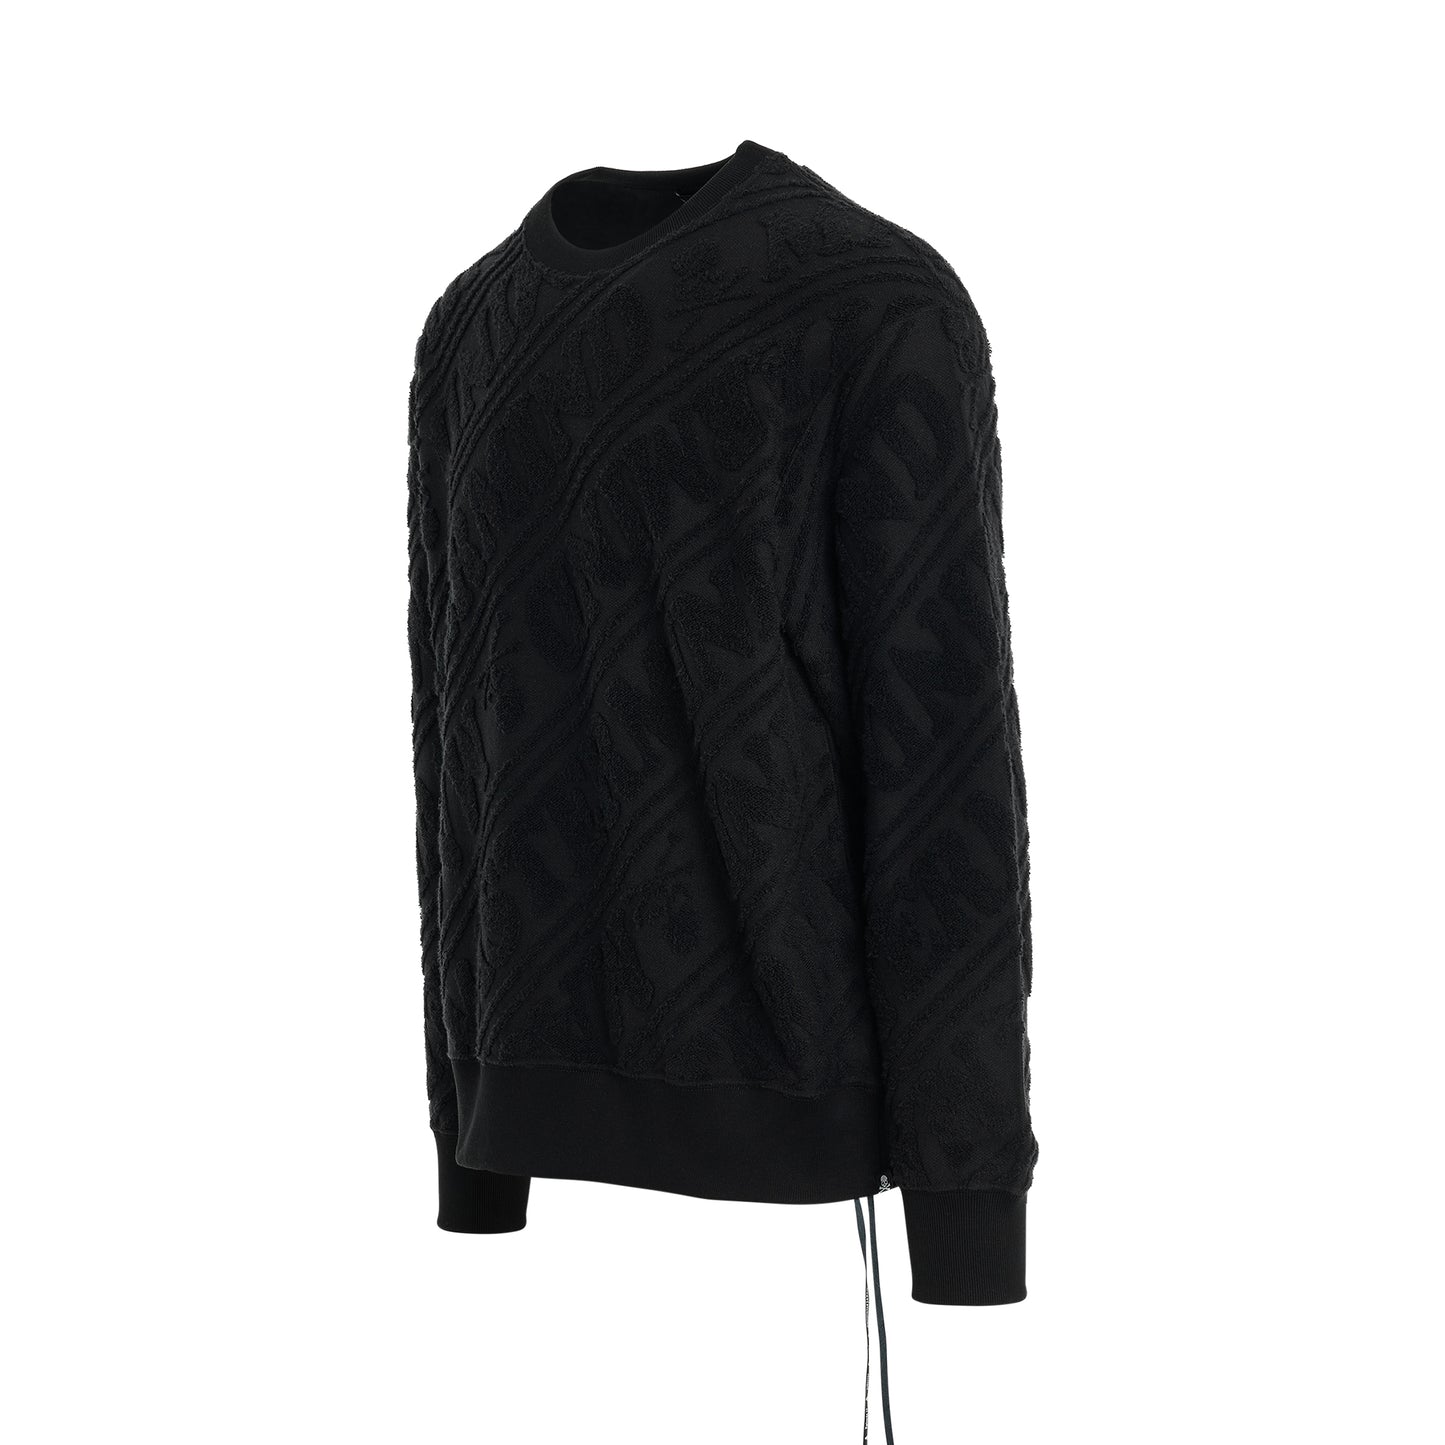 Pile Jacquard Sweatshirt in Black